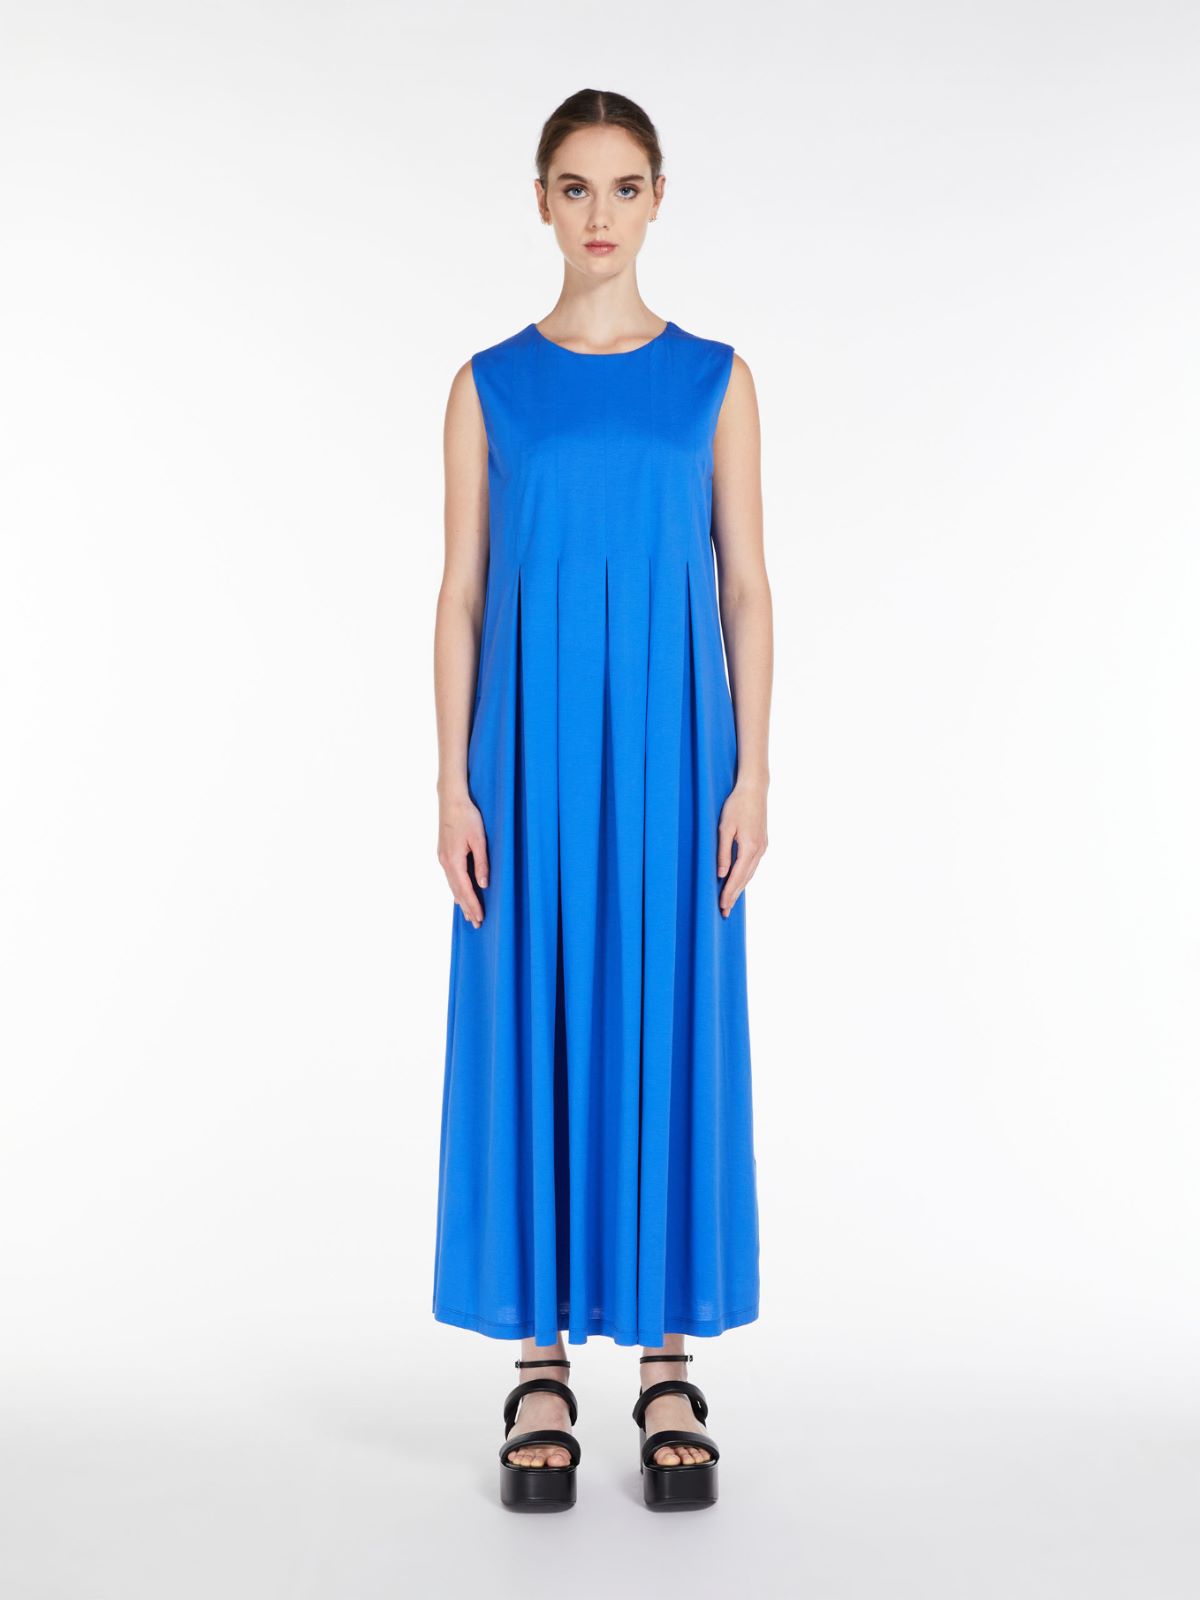 Cotton jersey dress  - CORNFLOWER BLUE - Weekend Max Mara - 2